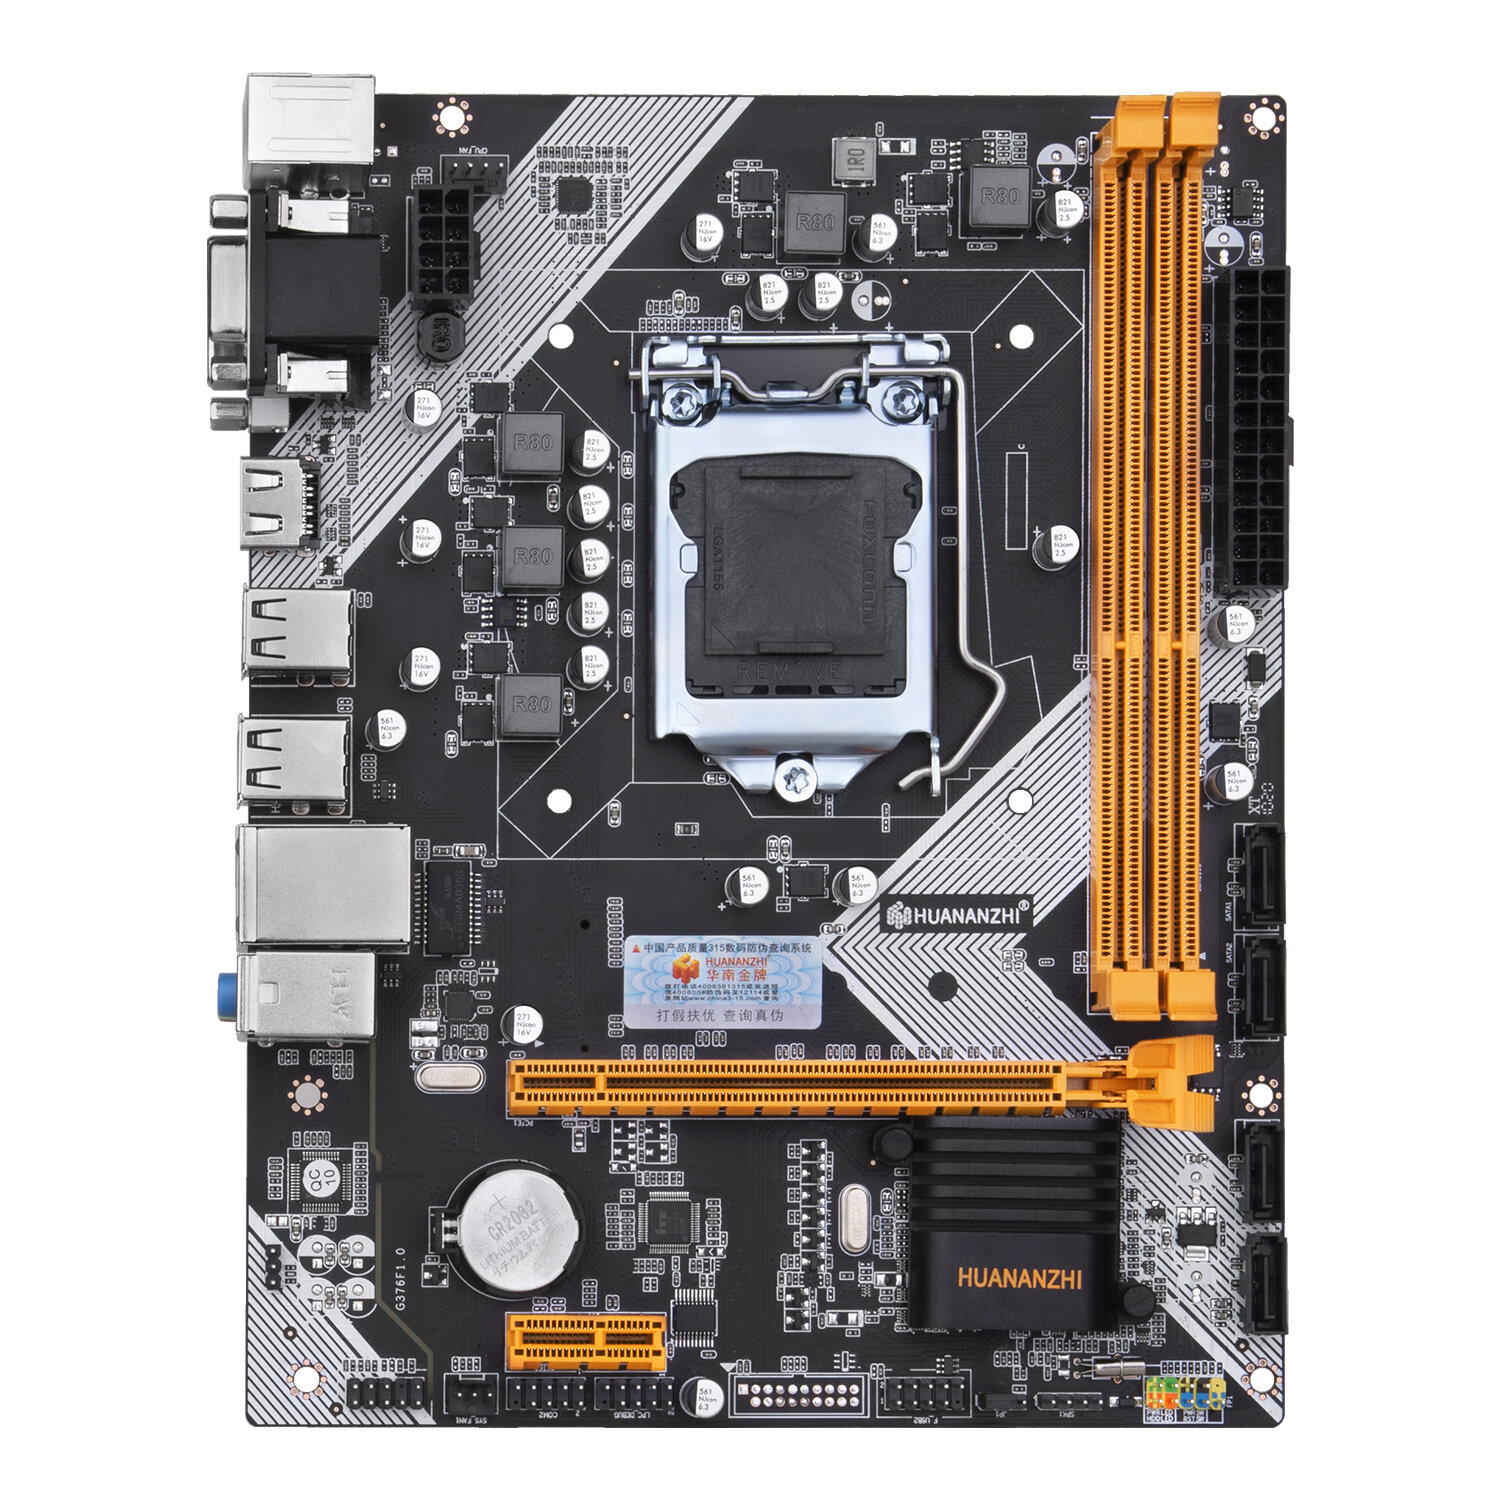 

HUANANZHI H61 Motherboard M-ATX For Intel LGA 1155 Support i3 i5 i7 DDR3 1333/1600MHz 16GB SATA2.0 USB2.0 VGA HDMI